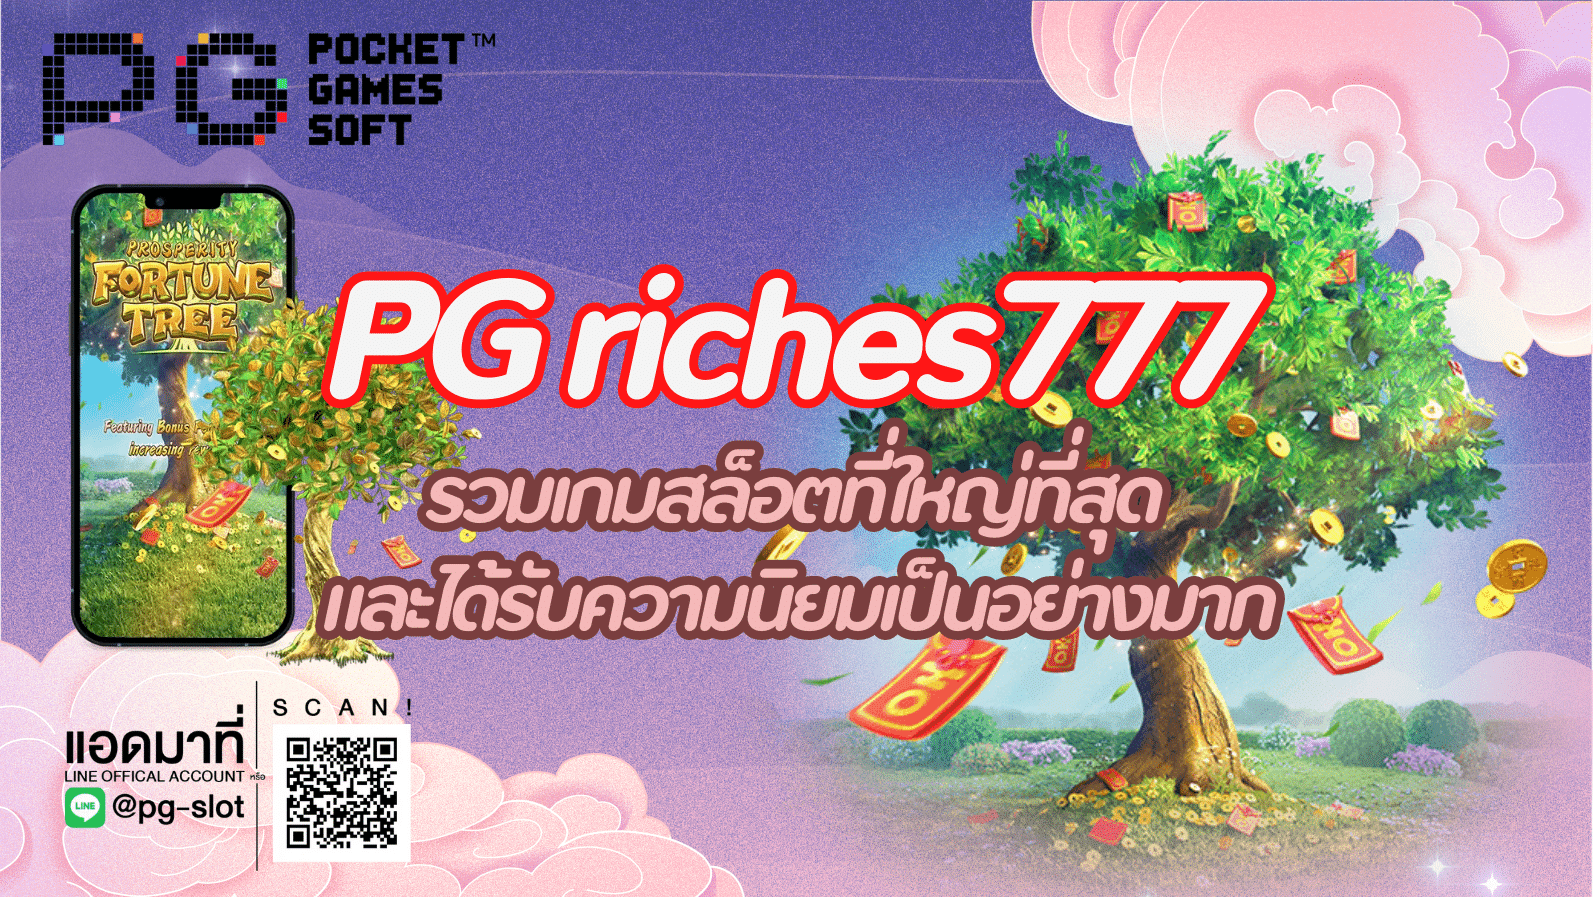 PG riches777